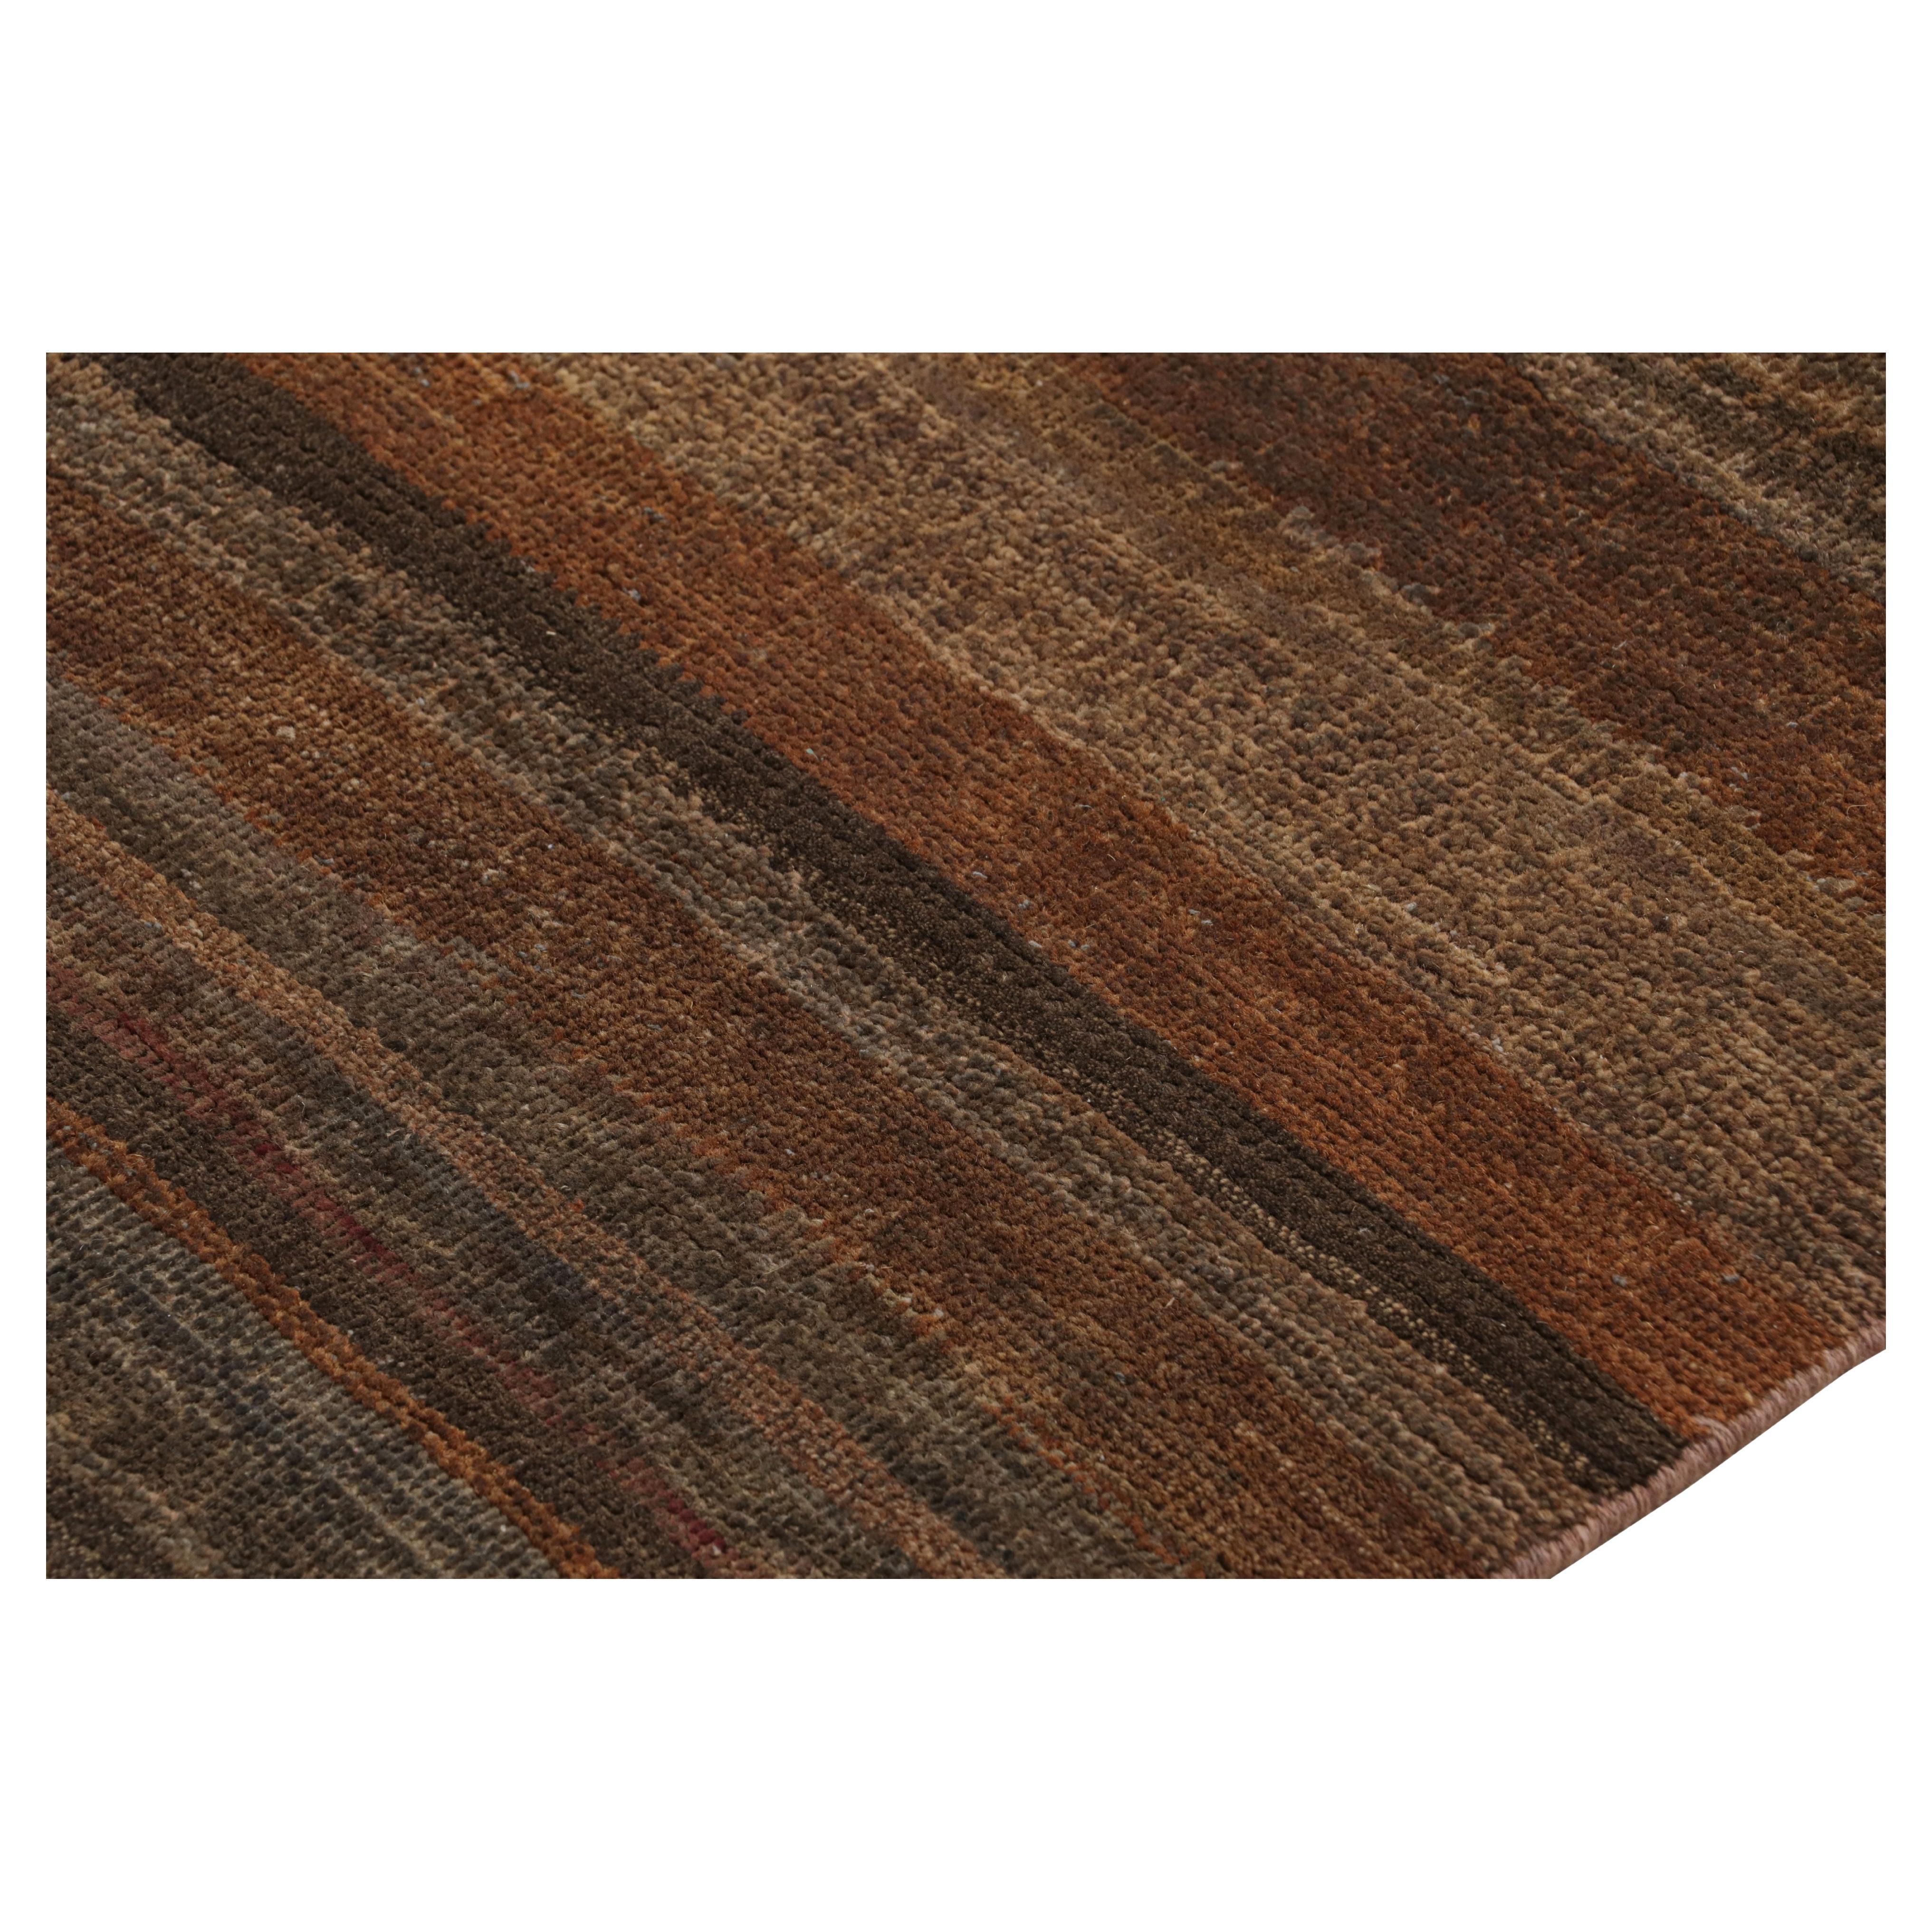 Rug & Kilim's Modern Textural Rug in Beige-Brown and Umber Stripes and Striae (Tapis à rayures beige, marron et orange)